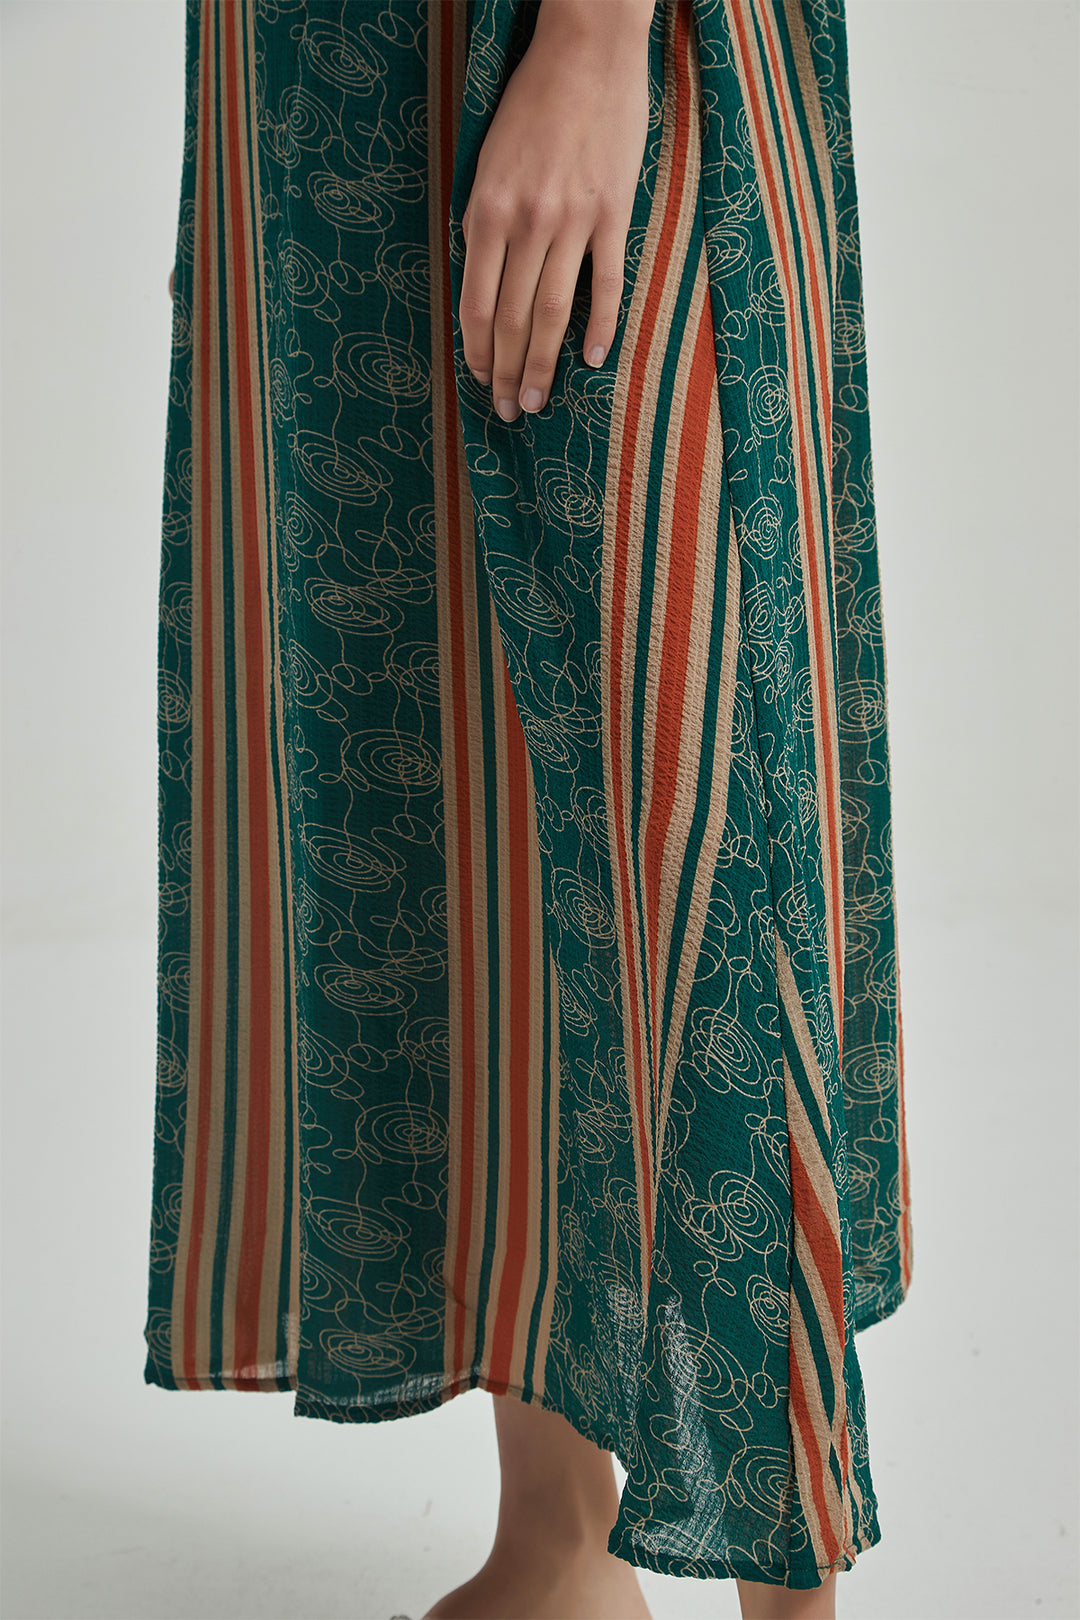 Contrast Color Stripes Cozy Silk Dress